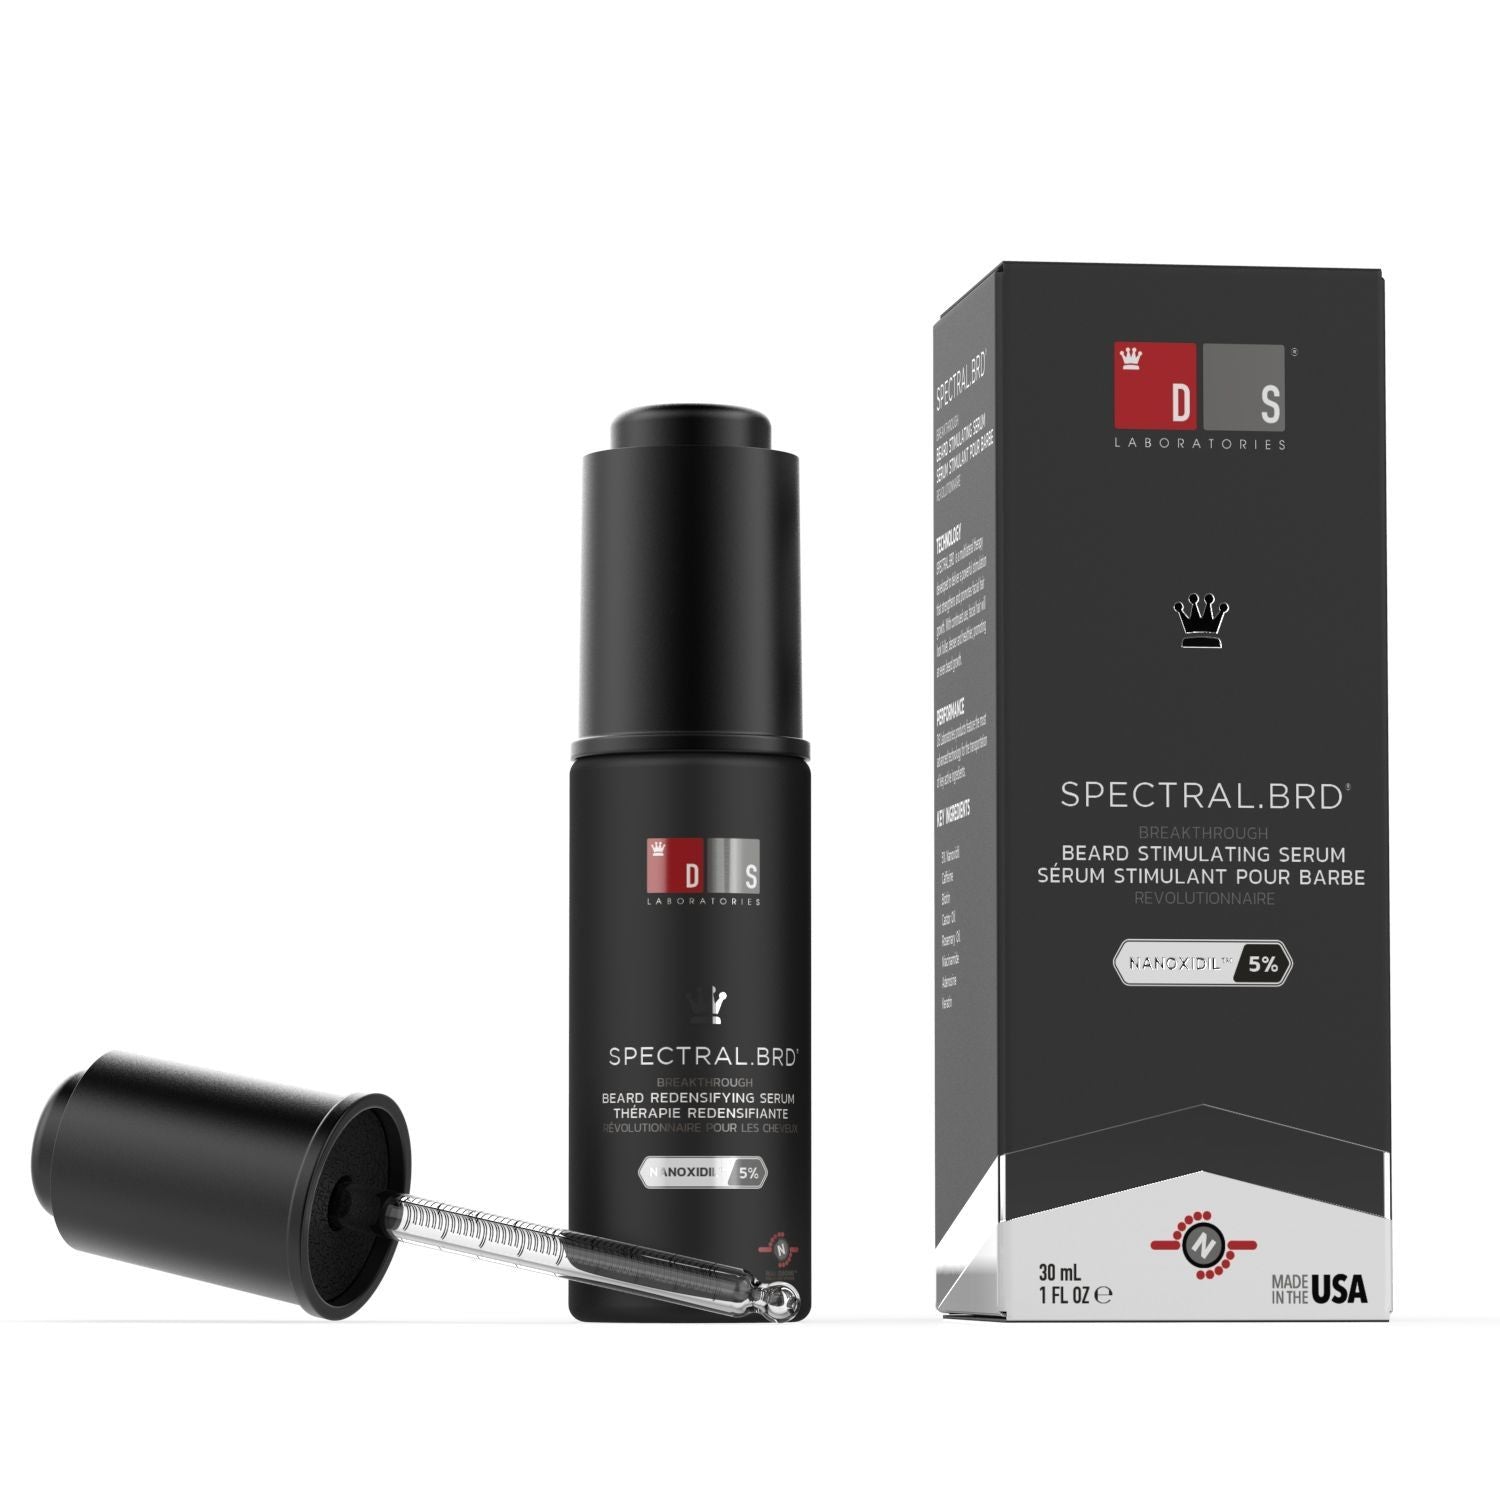 Spectral.BRD | Breakthrough Beard Stimulating Serum